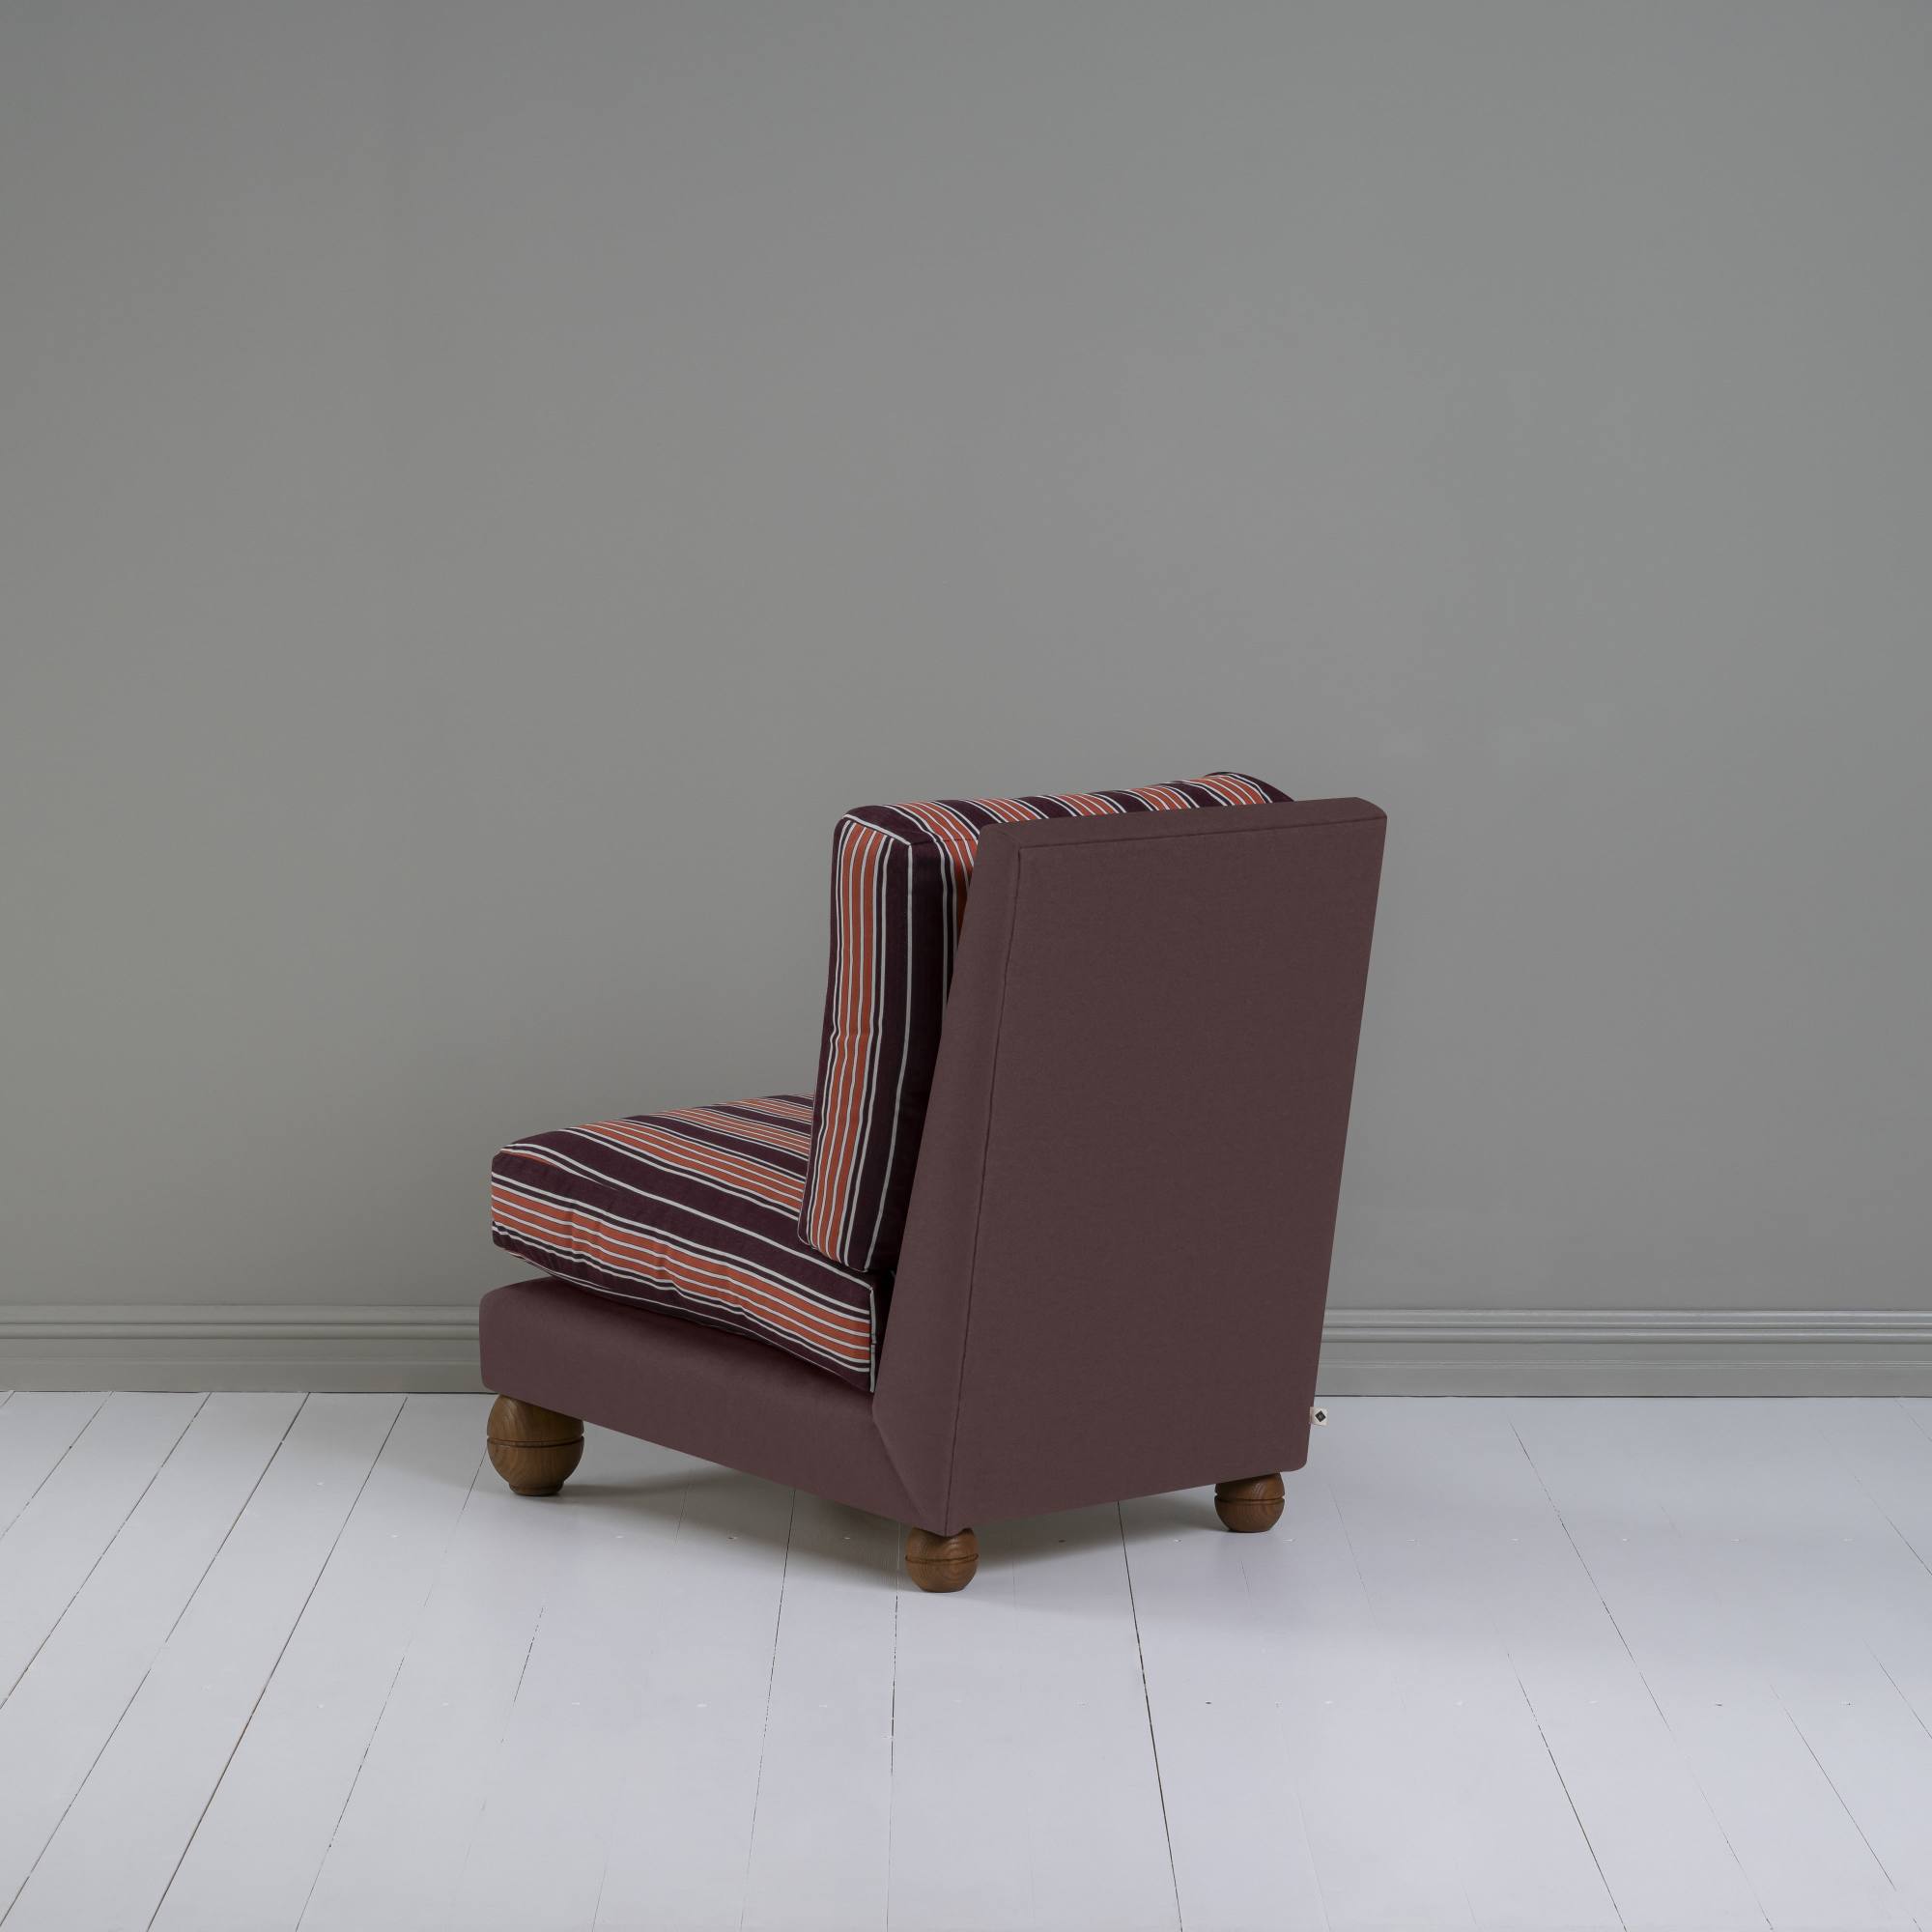  Perch Slipper Armchair in Laidback Linen Damson Frame, with Regatta Cotton, Flame Seat 